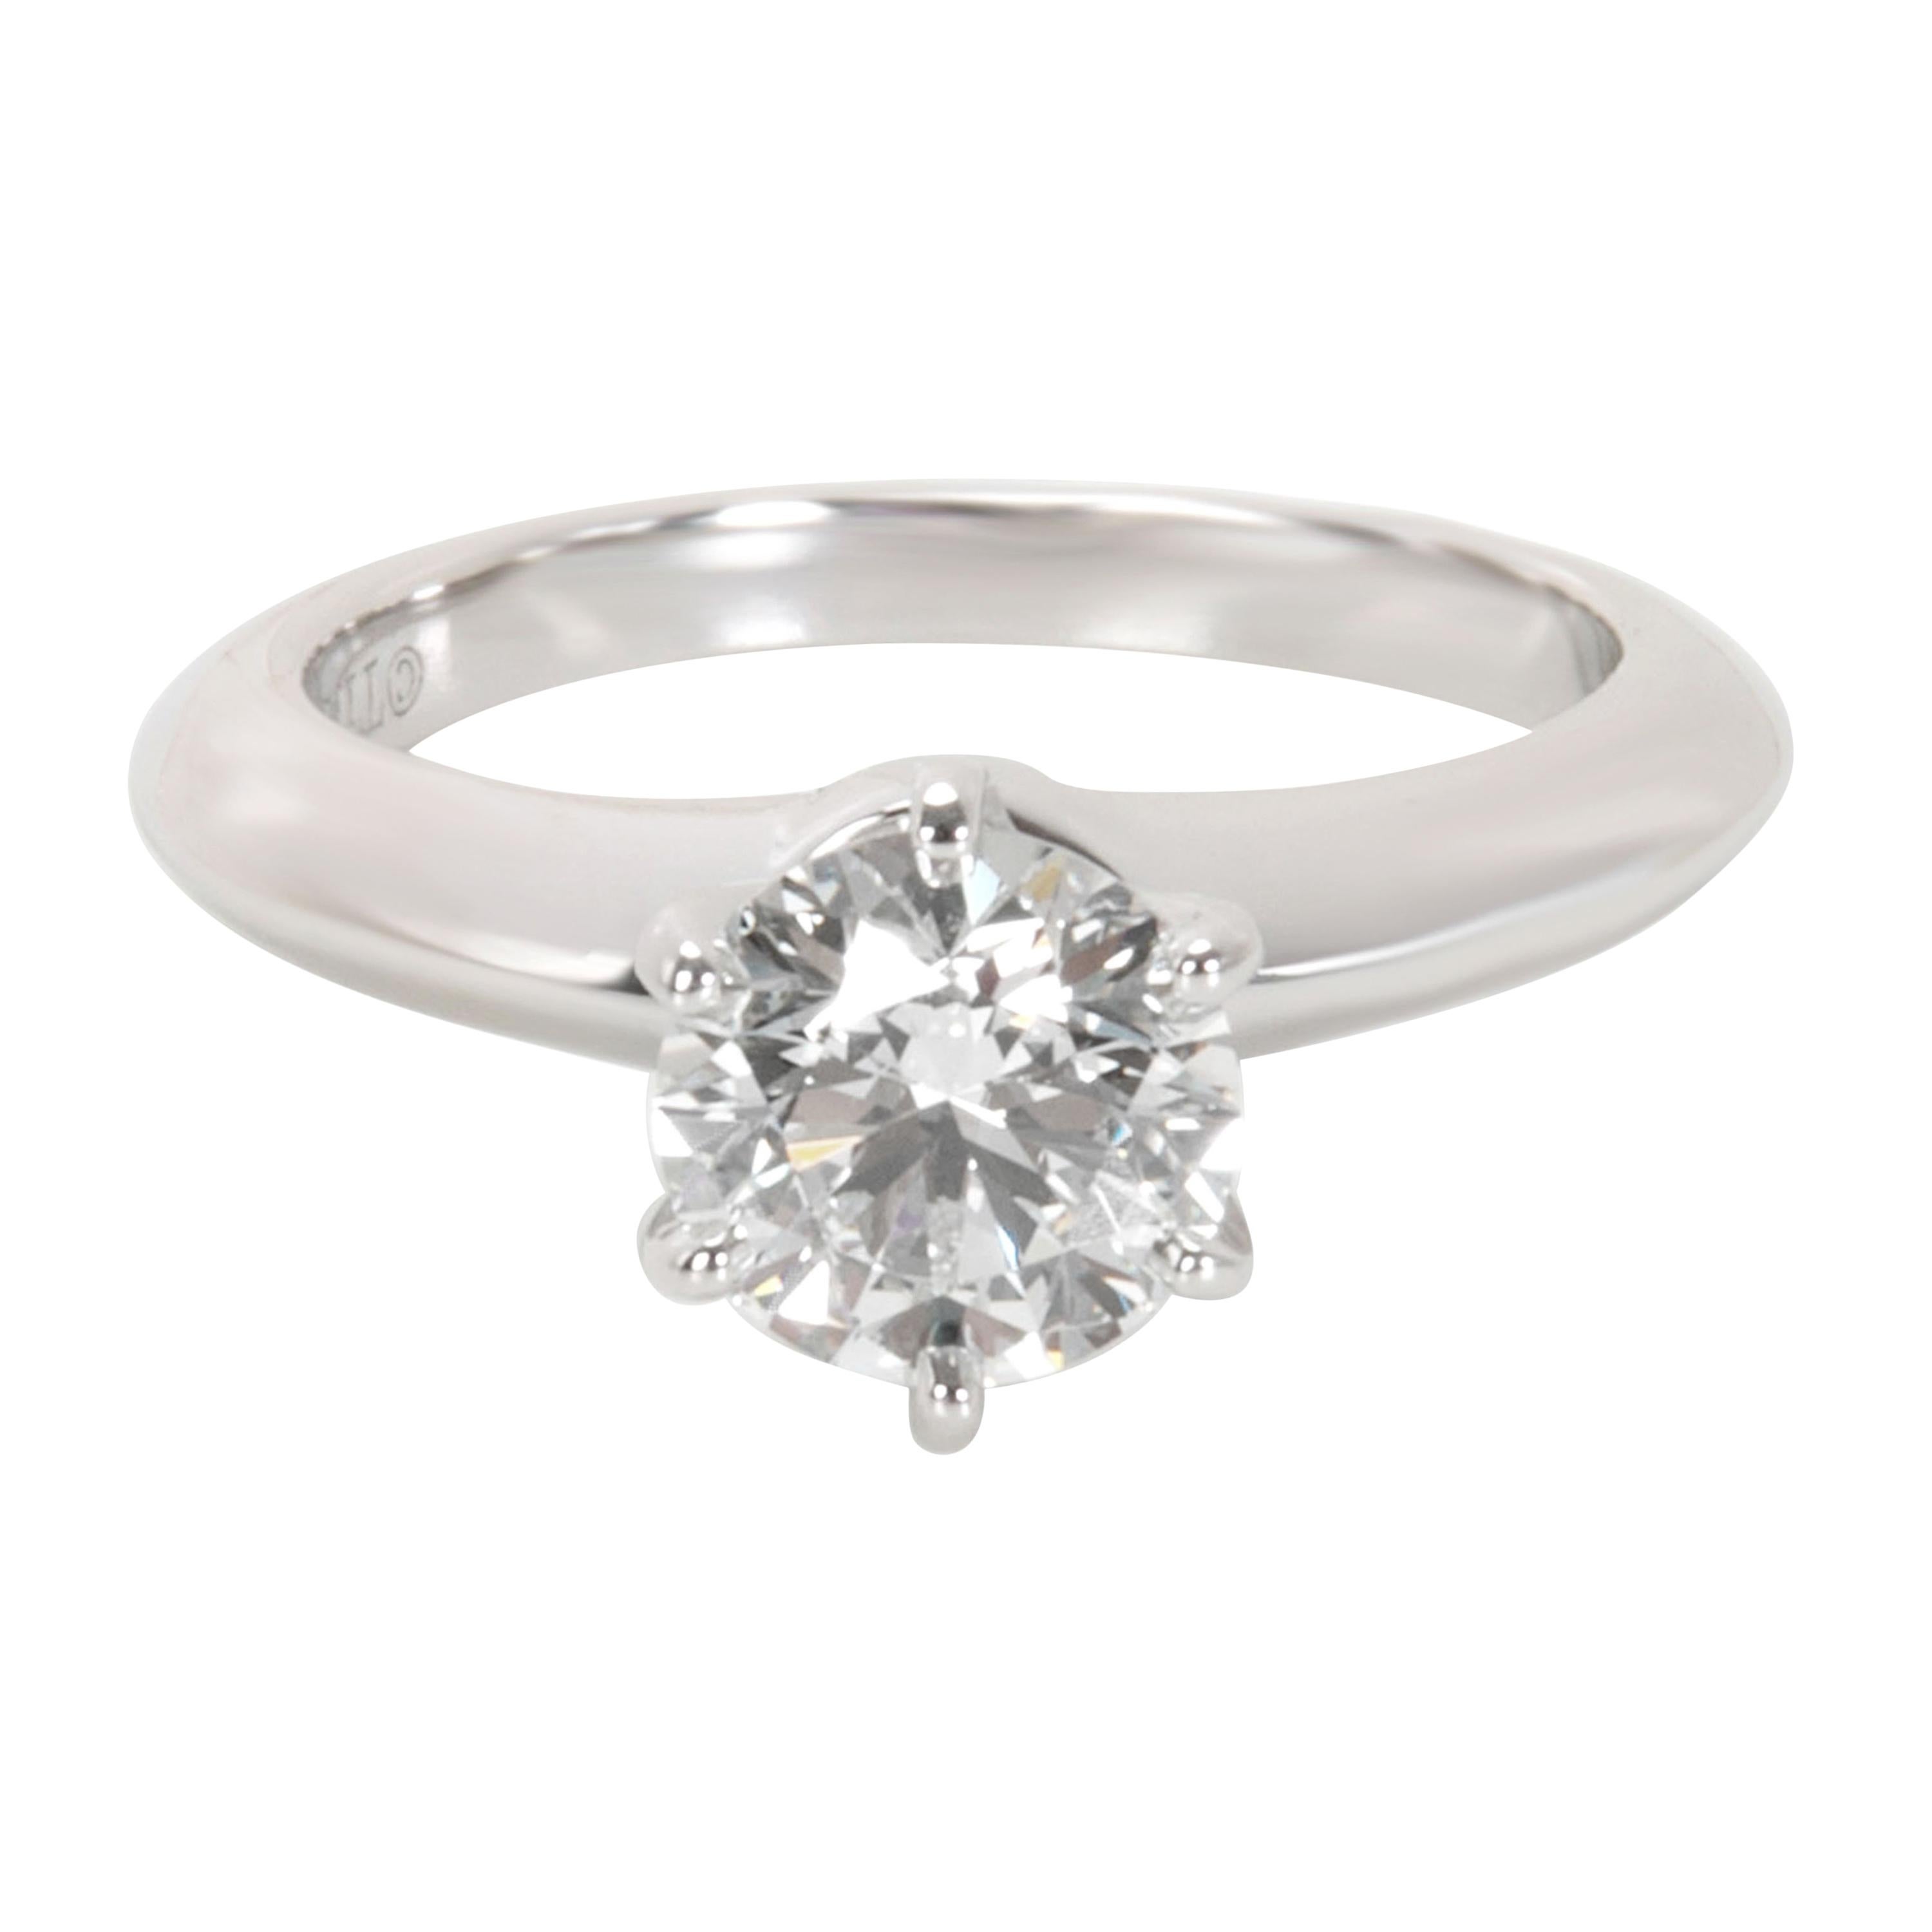 Tiffany & Co. Diamond Solitaire Engagement Ring in Platinum 'F/VVS1' 0.93 Carat